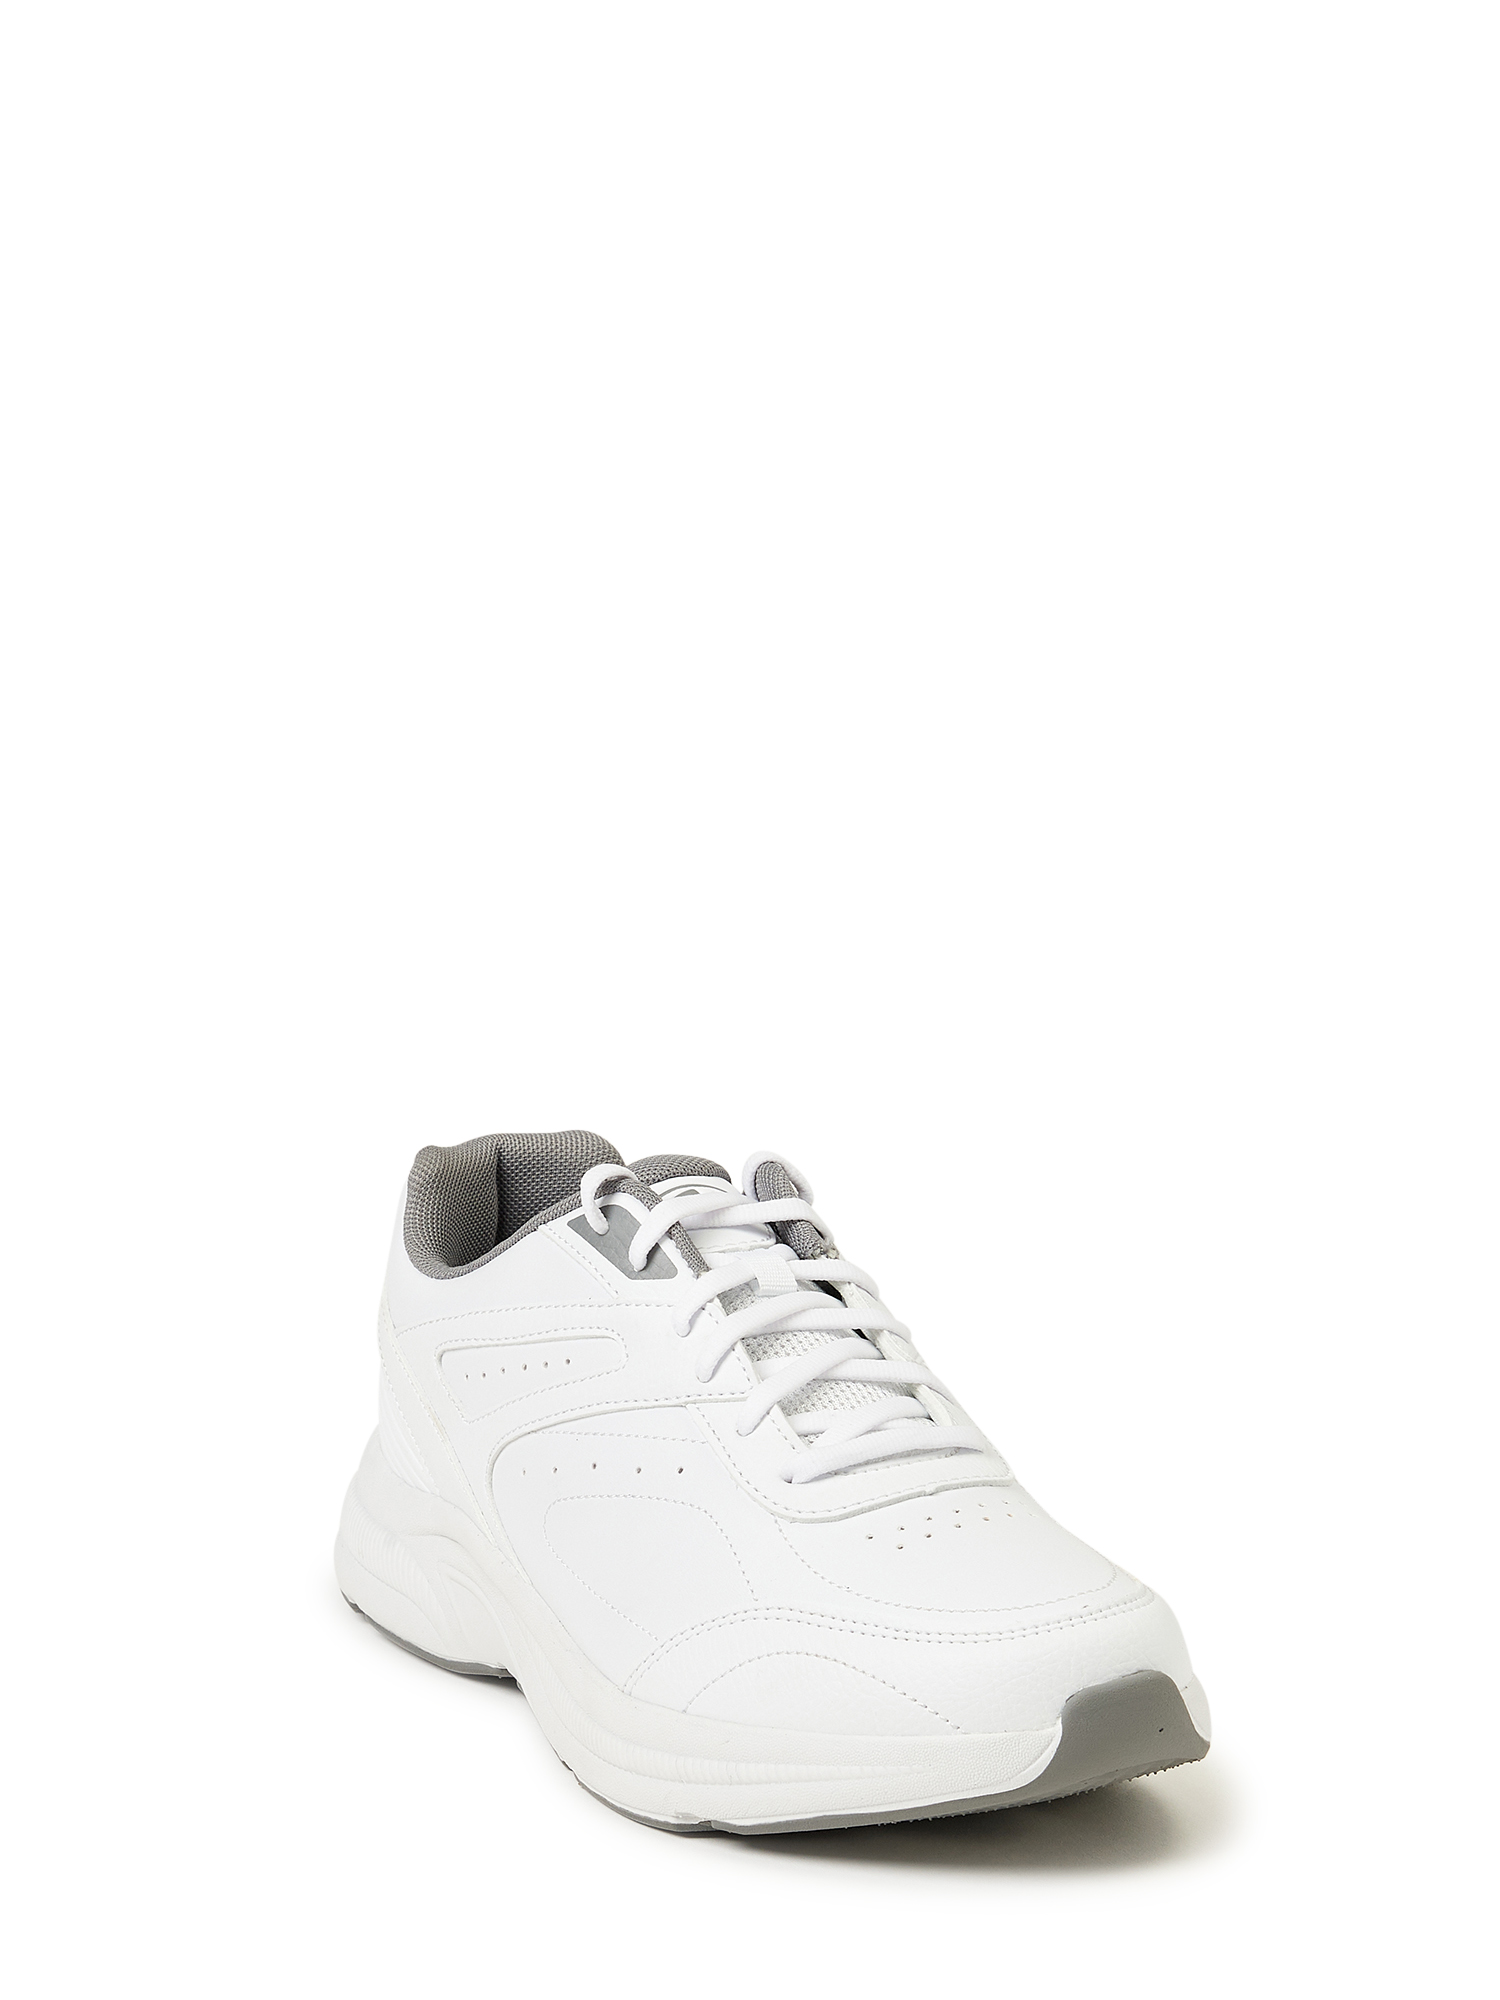 Athletic Works Men's Omar Walking Shoe-White-Size 11.5-NWT